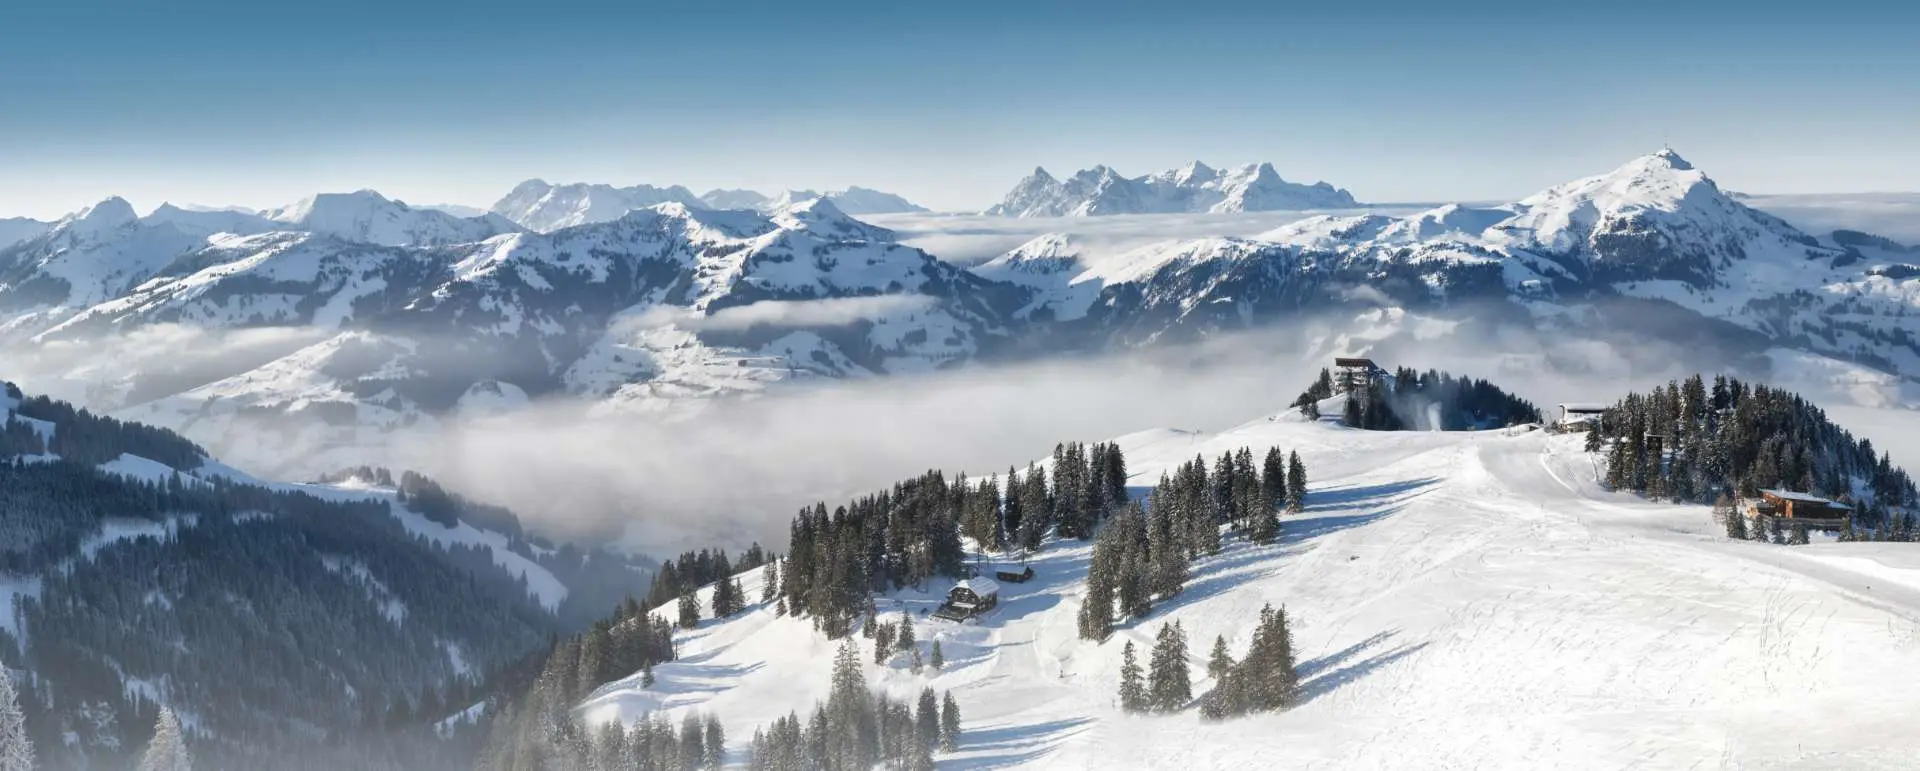 Kitzbühel Alps - the destination for pilgrimage accomodations